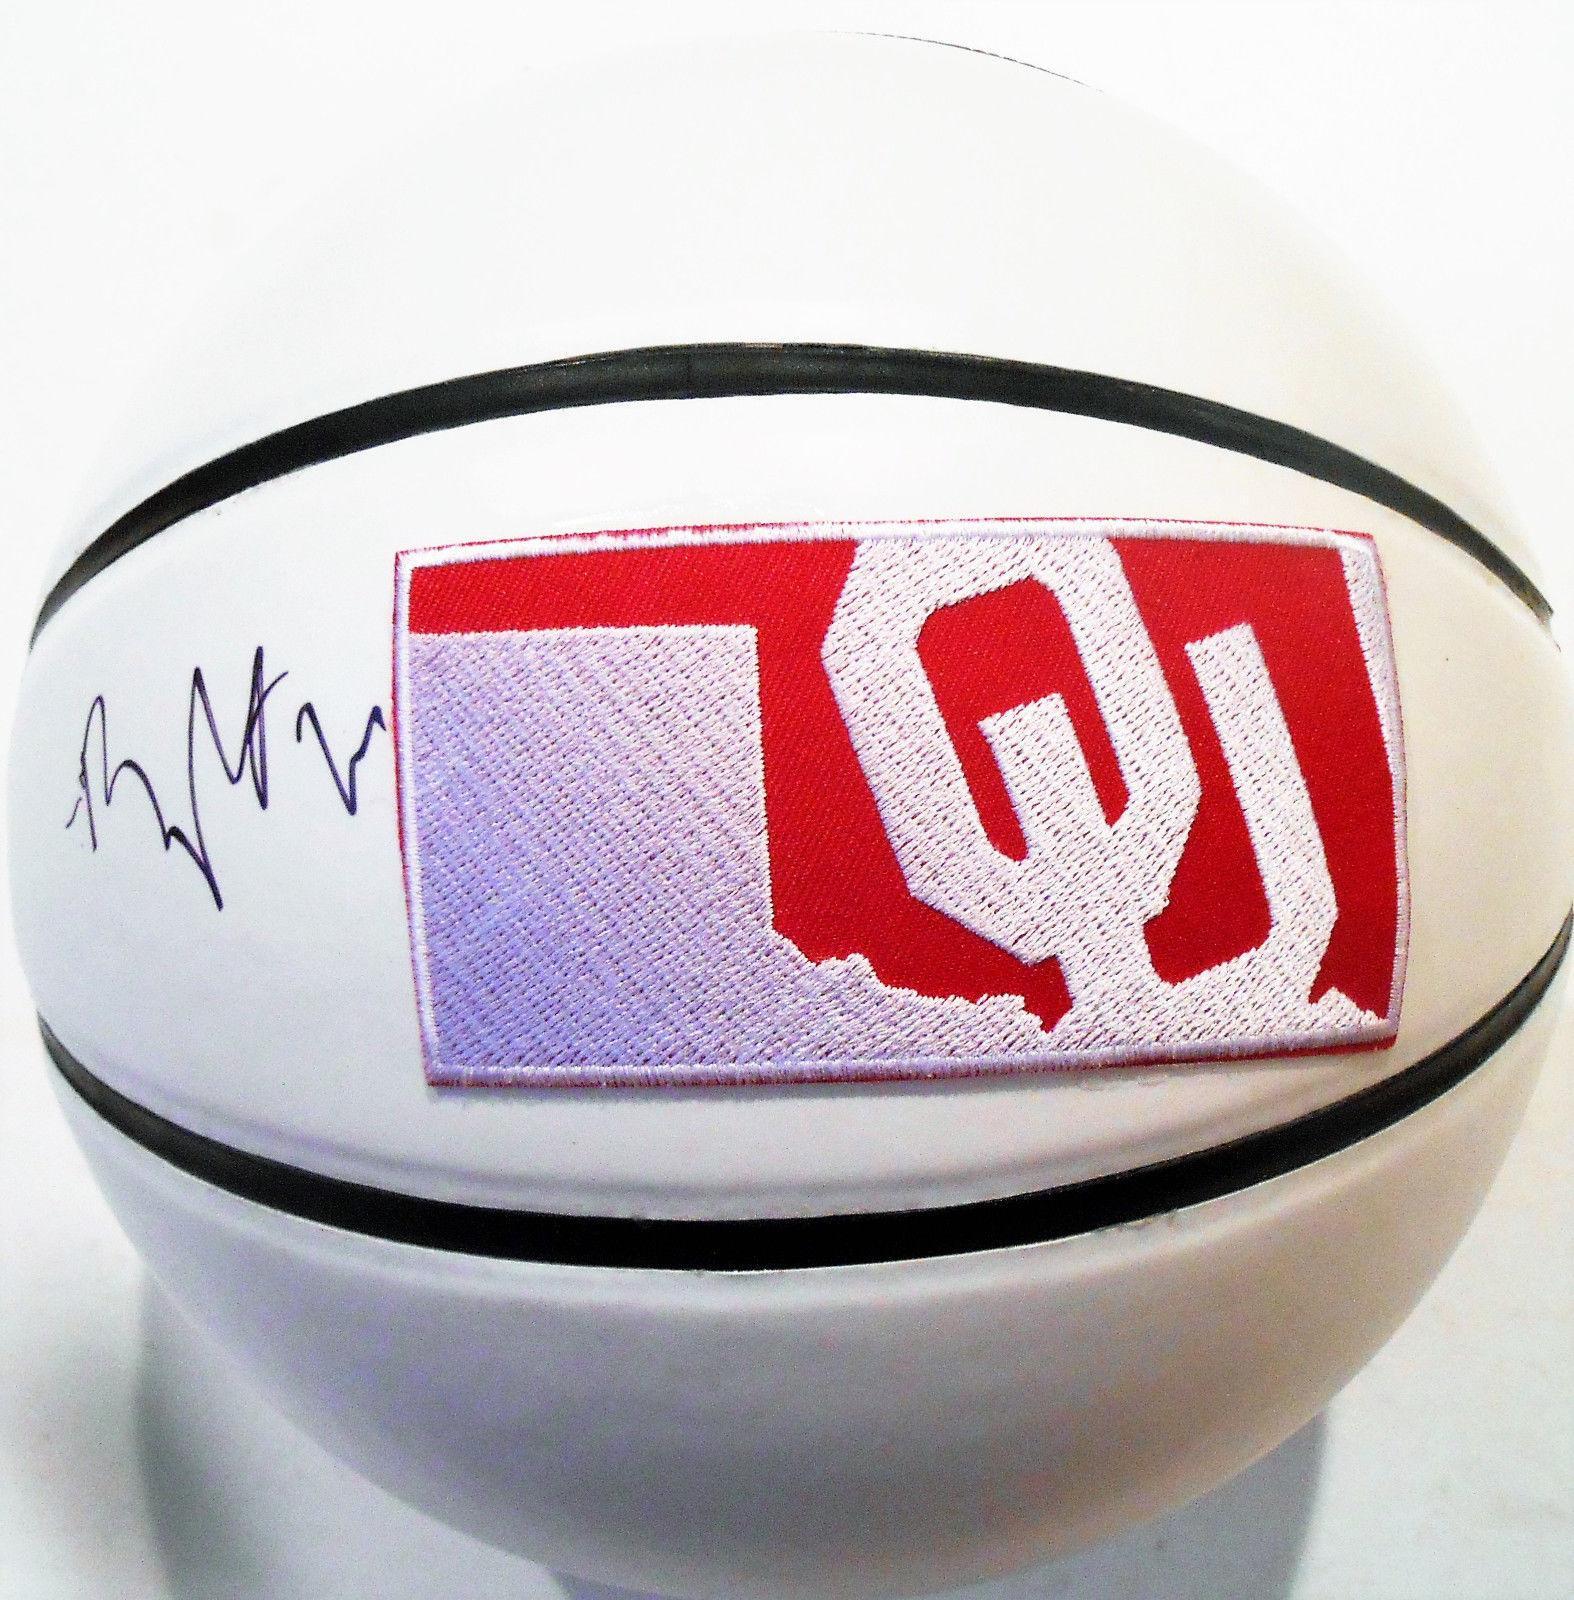 Sooners Logo - Buddy Hield Signed Oklahoma Sooners Logo Basketball w/JSA COA SD19137